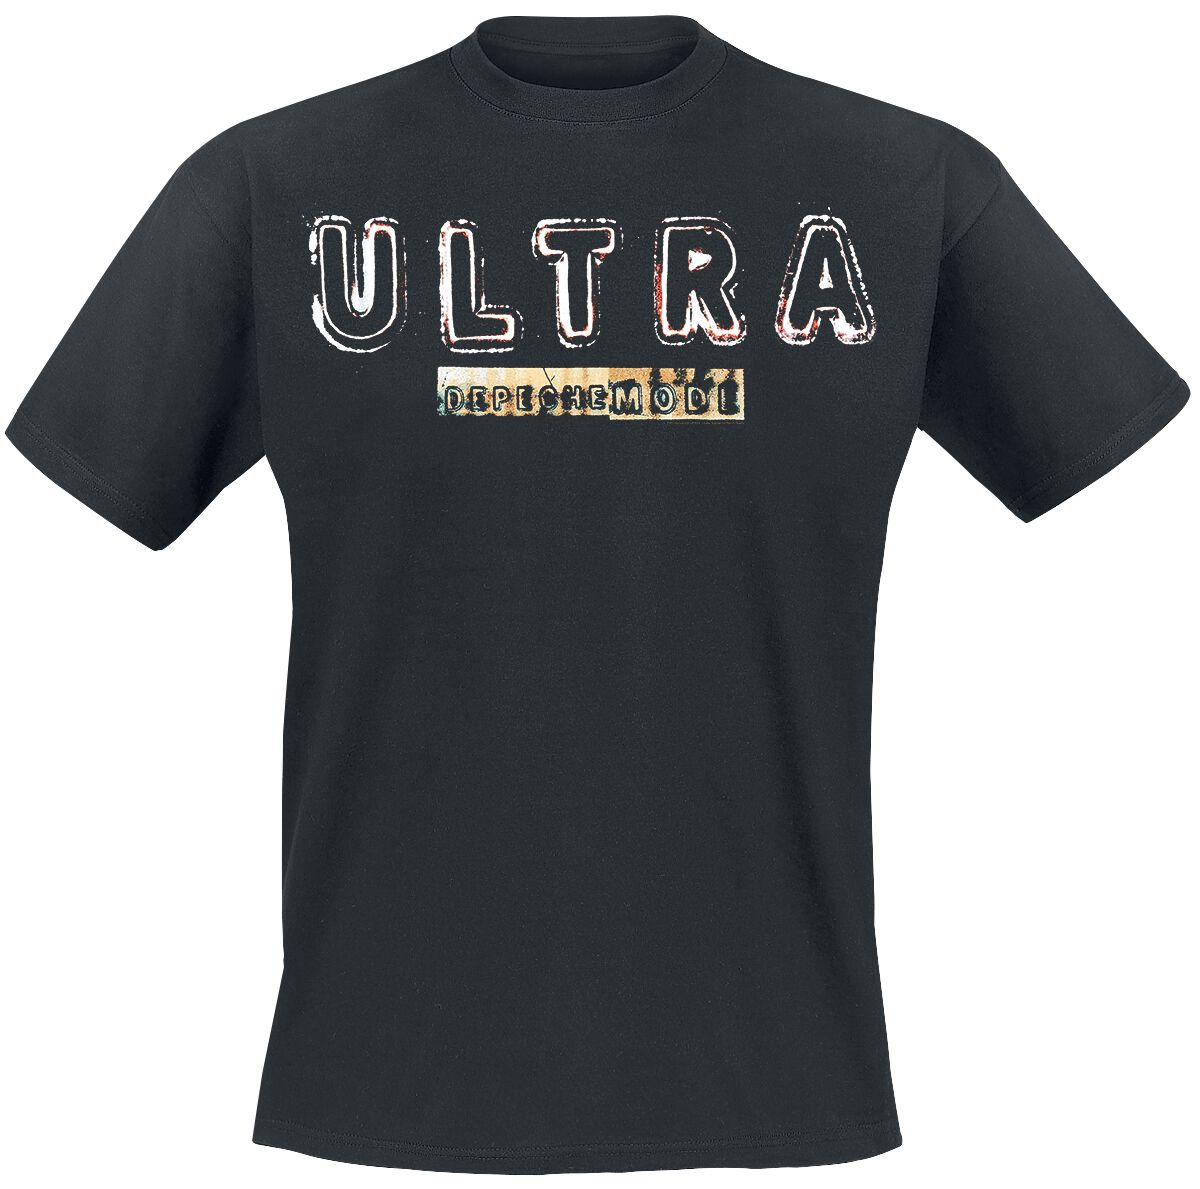 Depeche Mode T-Shirt - Ultra - S bis 4XL - für Männer - Größe 4XL - schwarz  - Lizenziertes Merchandise!